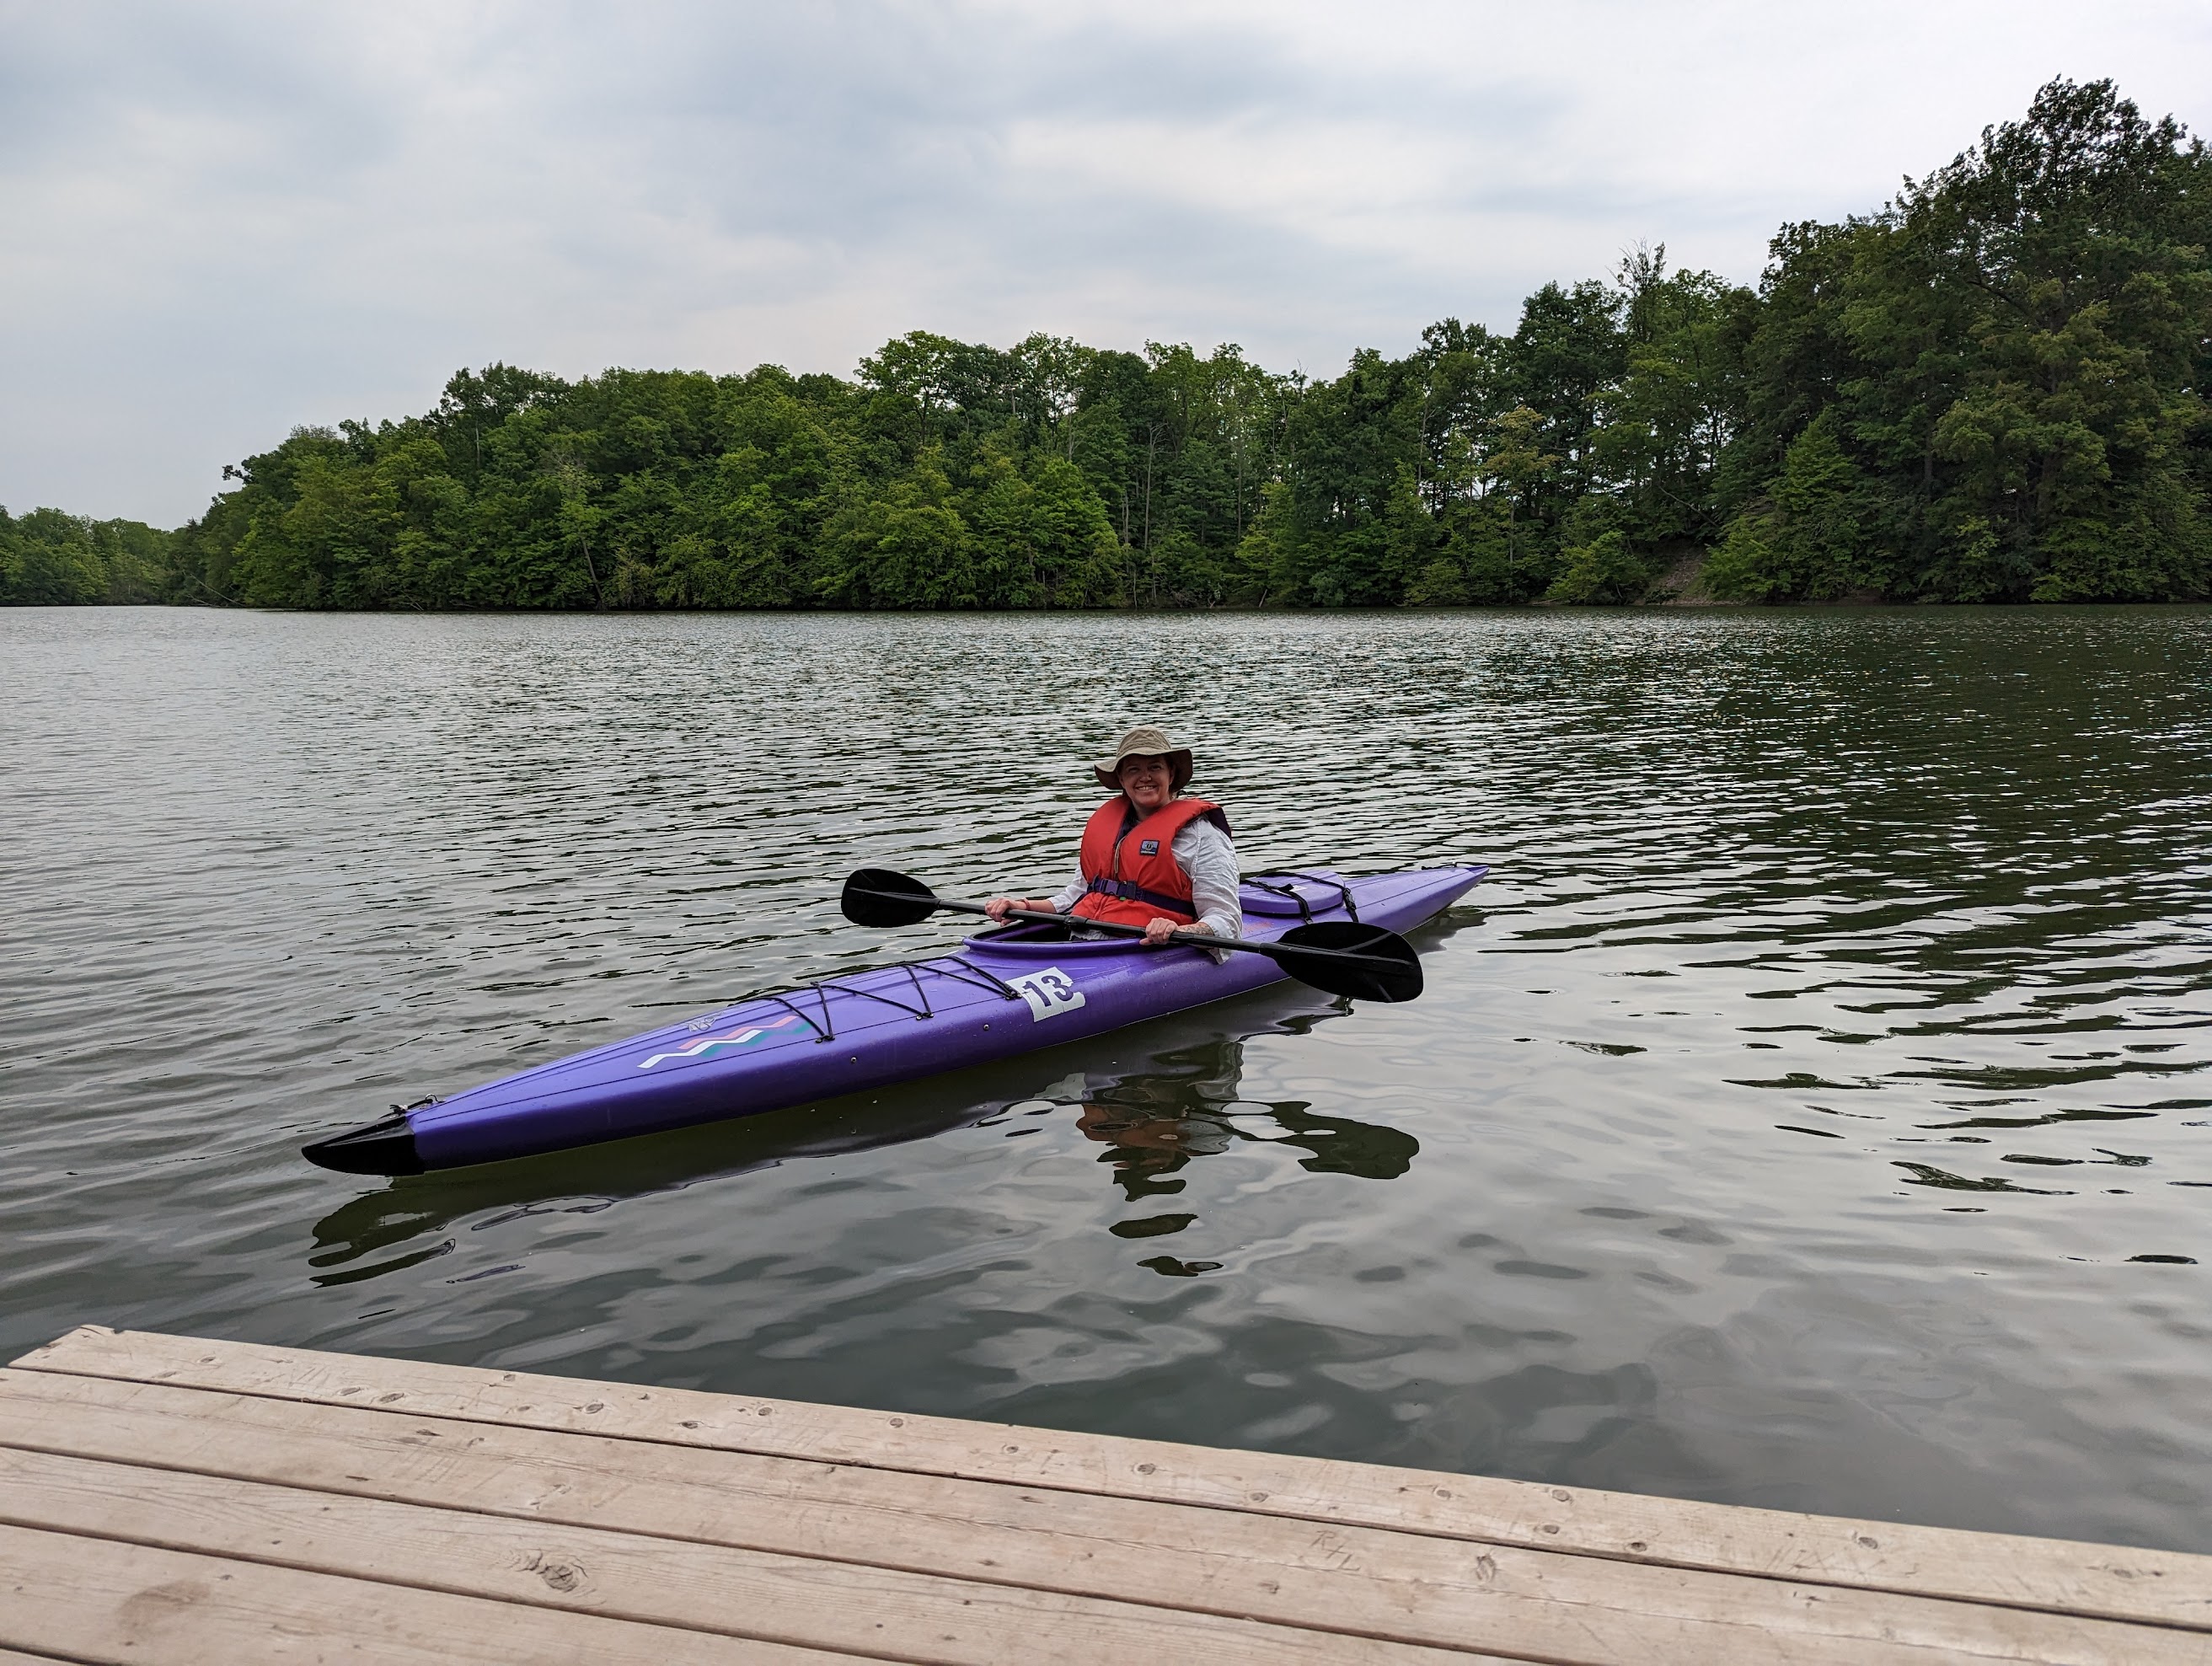 A canoe club member paddling a purple kayak